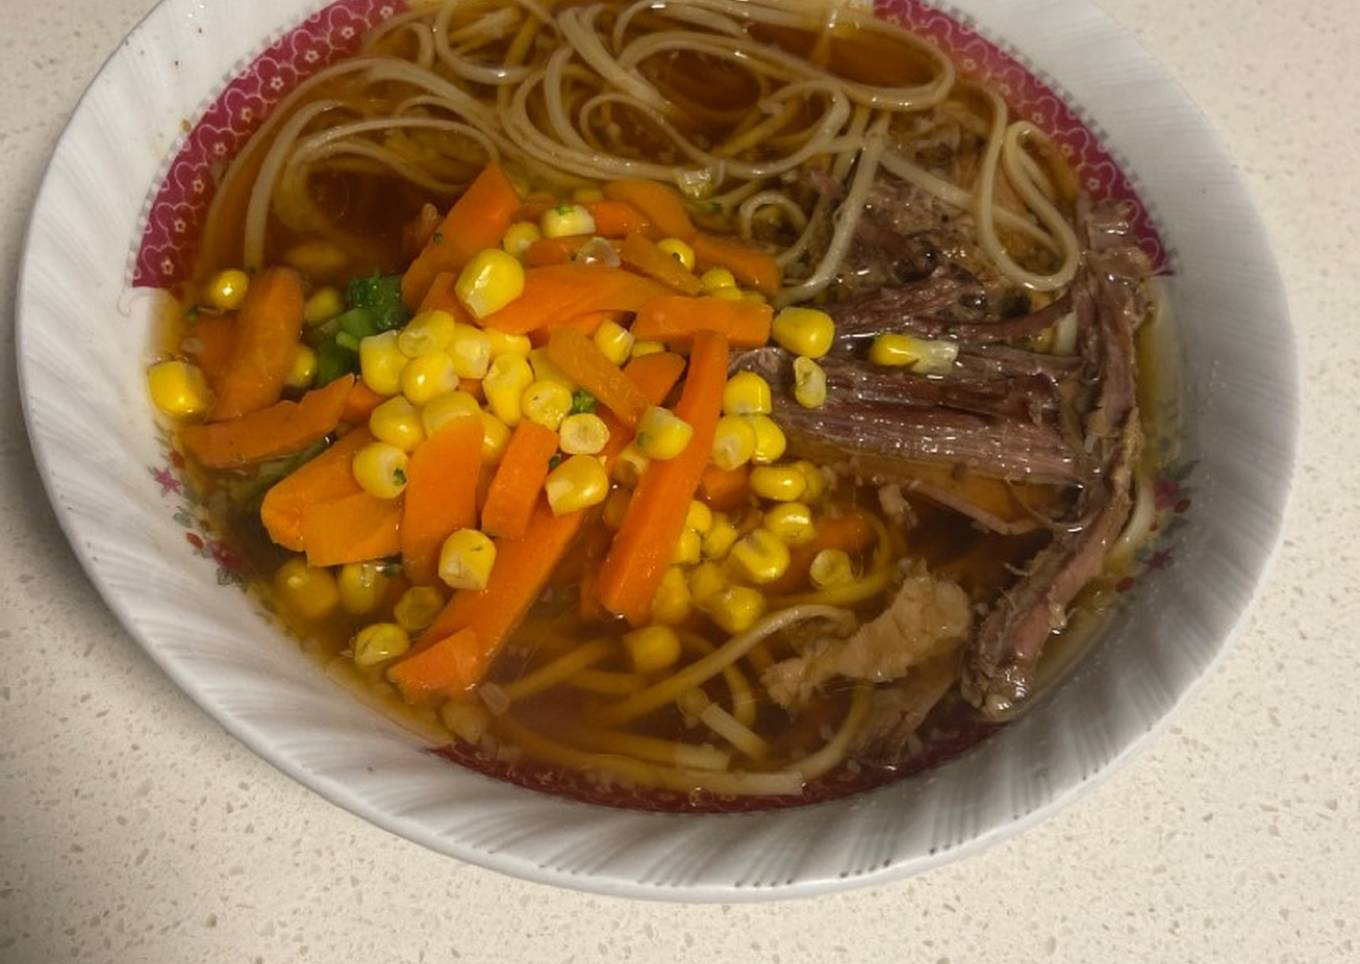 Slow cook beef brisket with noodles